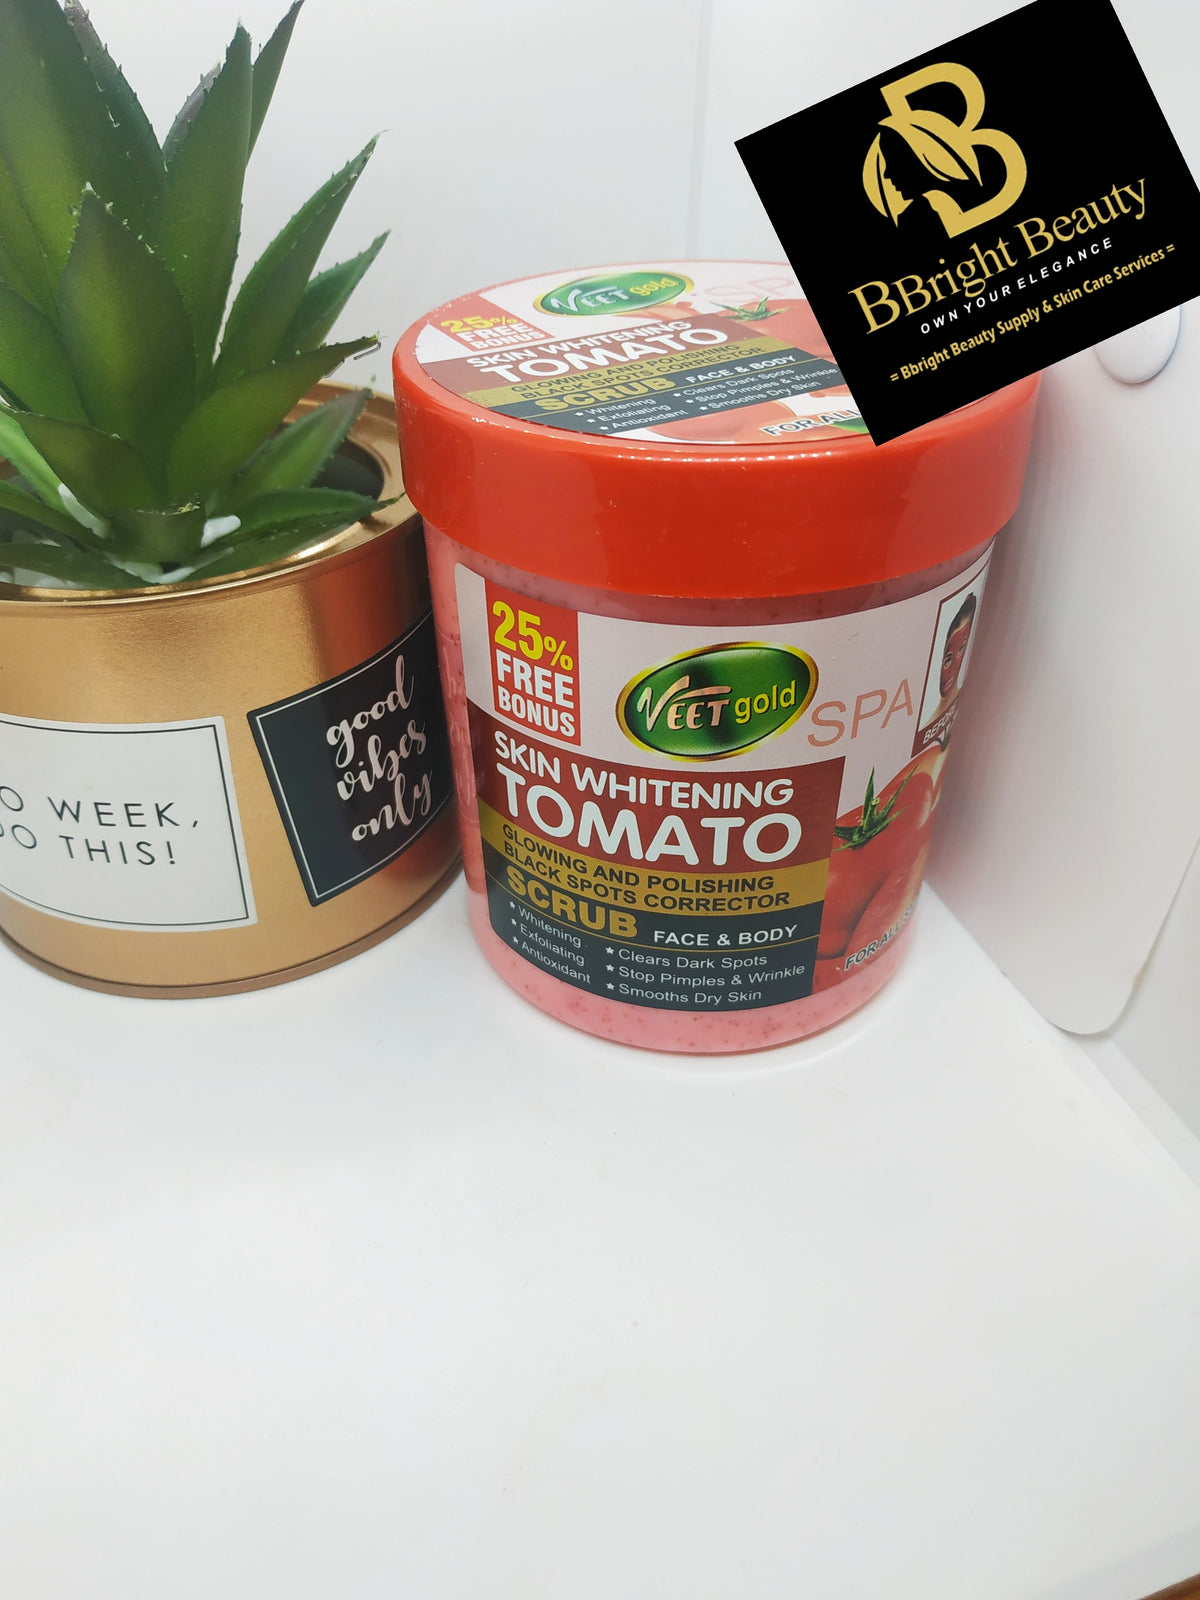 Veet Gold Skin Whitening Tomato Glowing, Polishing,Black Spot Corrector Body Scrub 500ml